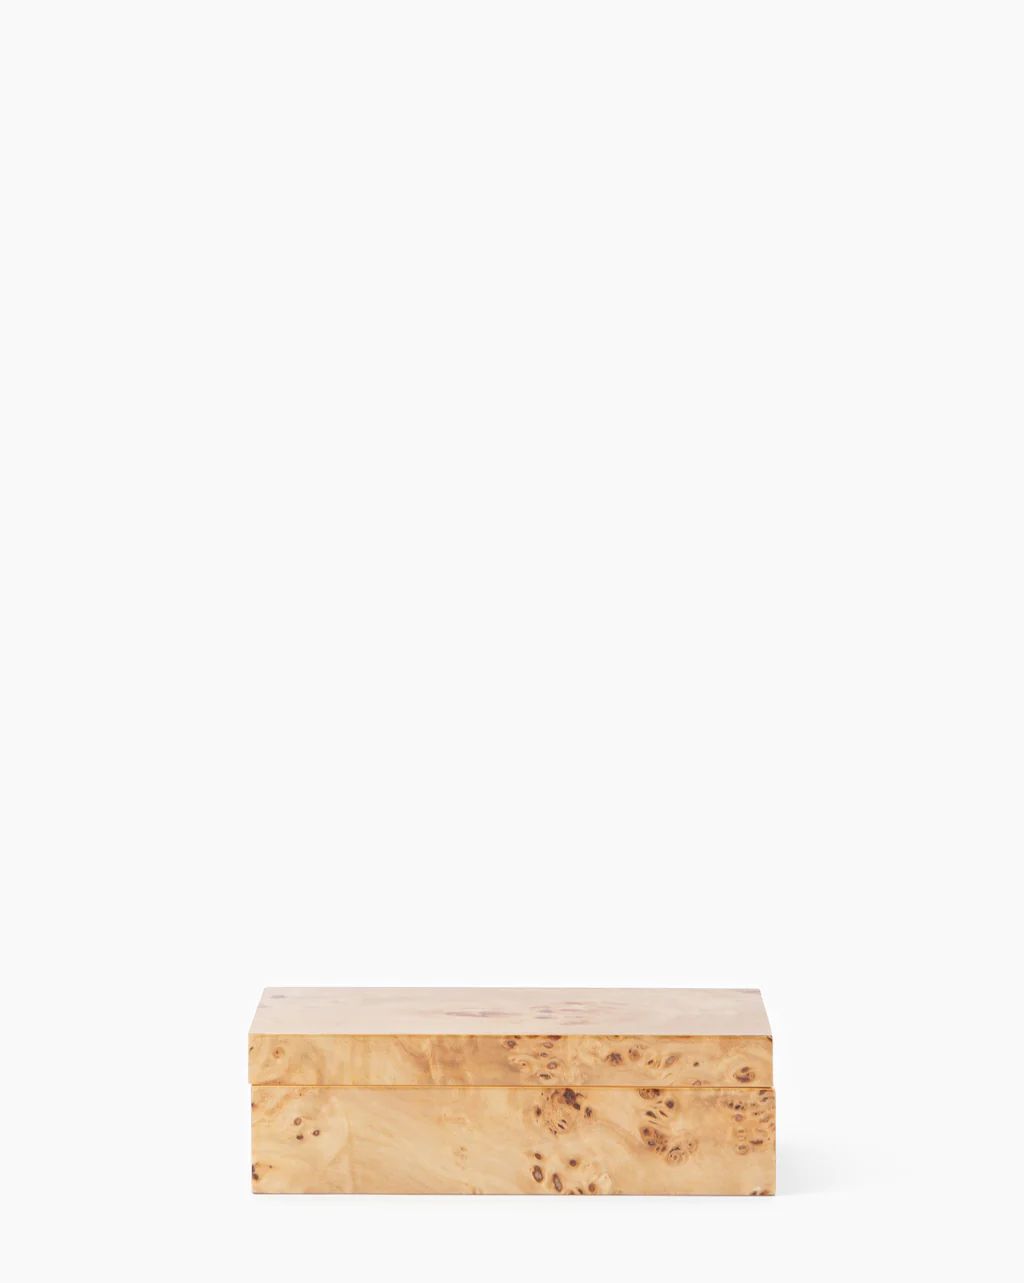 Burl Wood Box | McGee & Co.